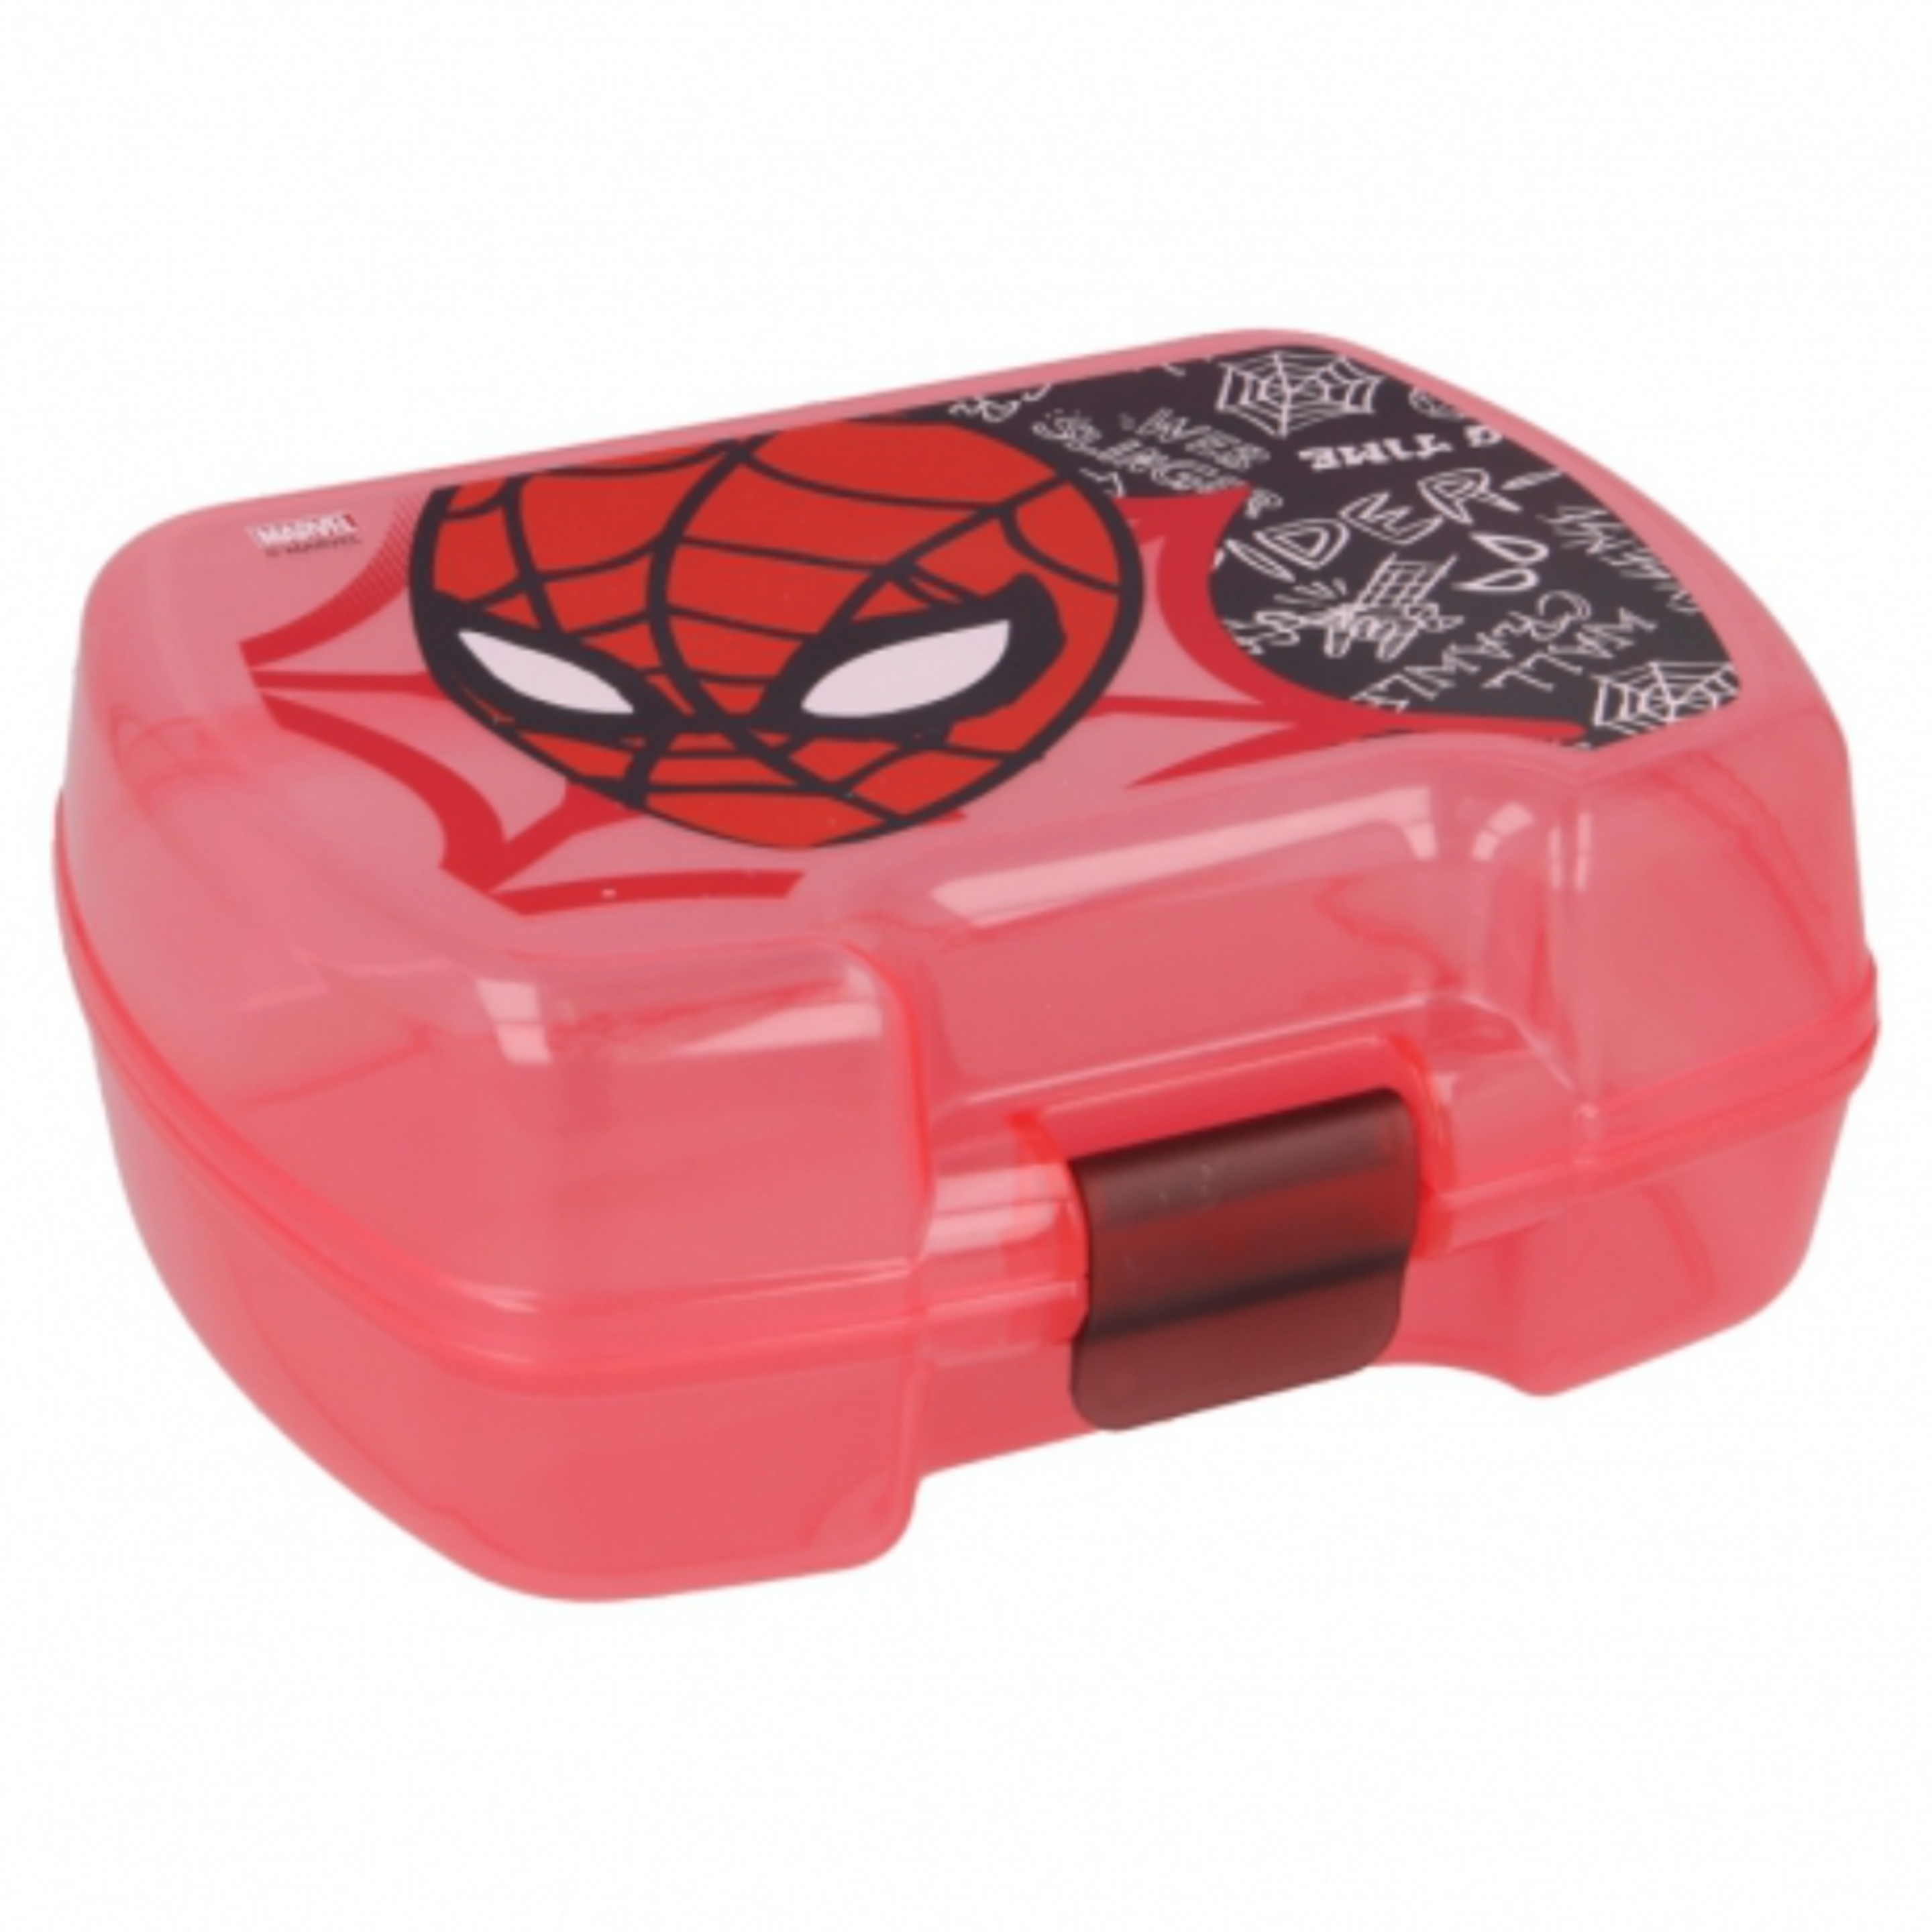 Sandwichera Spiderman 65657 - rojo - 